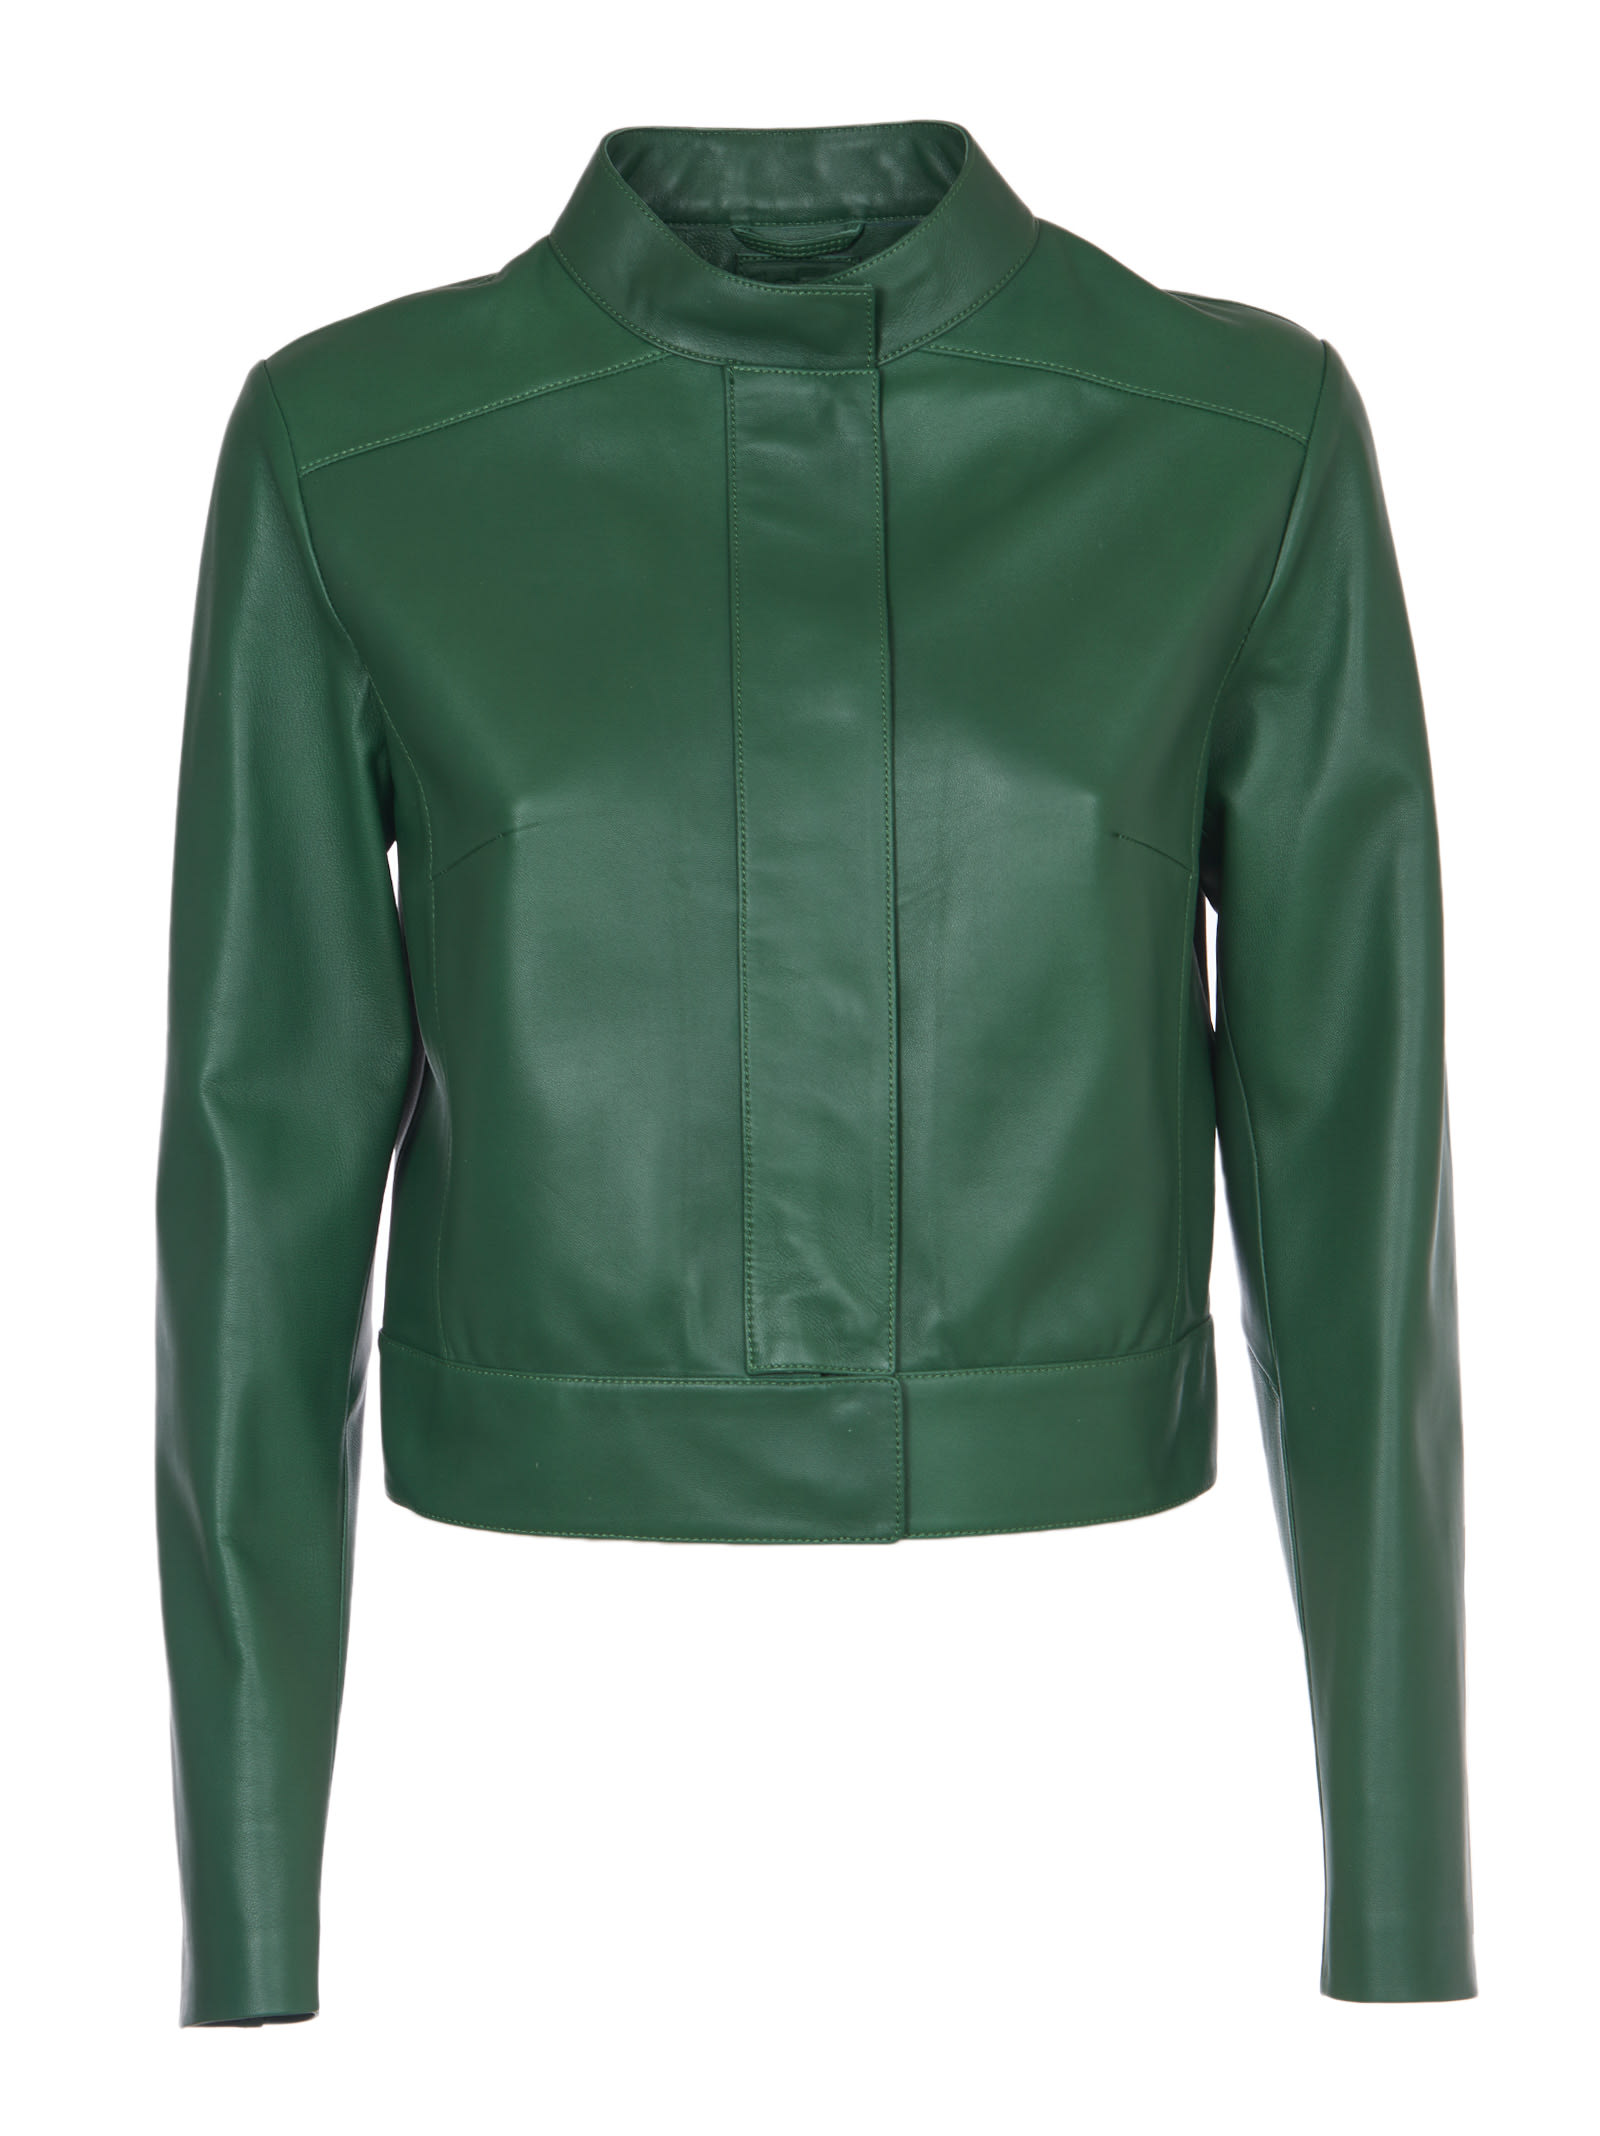 Desa 1972 Green Leather Short Jacket